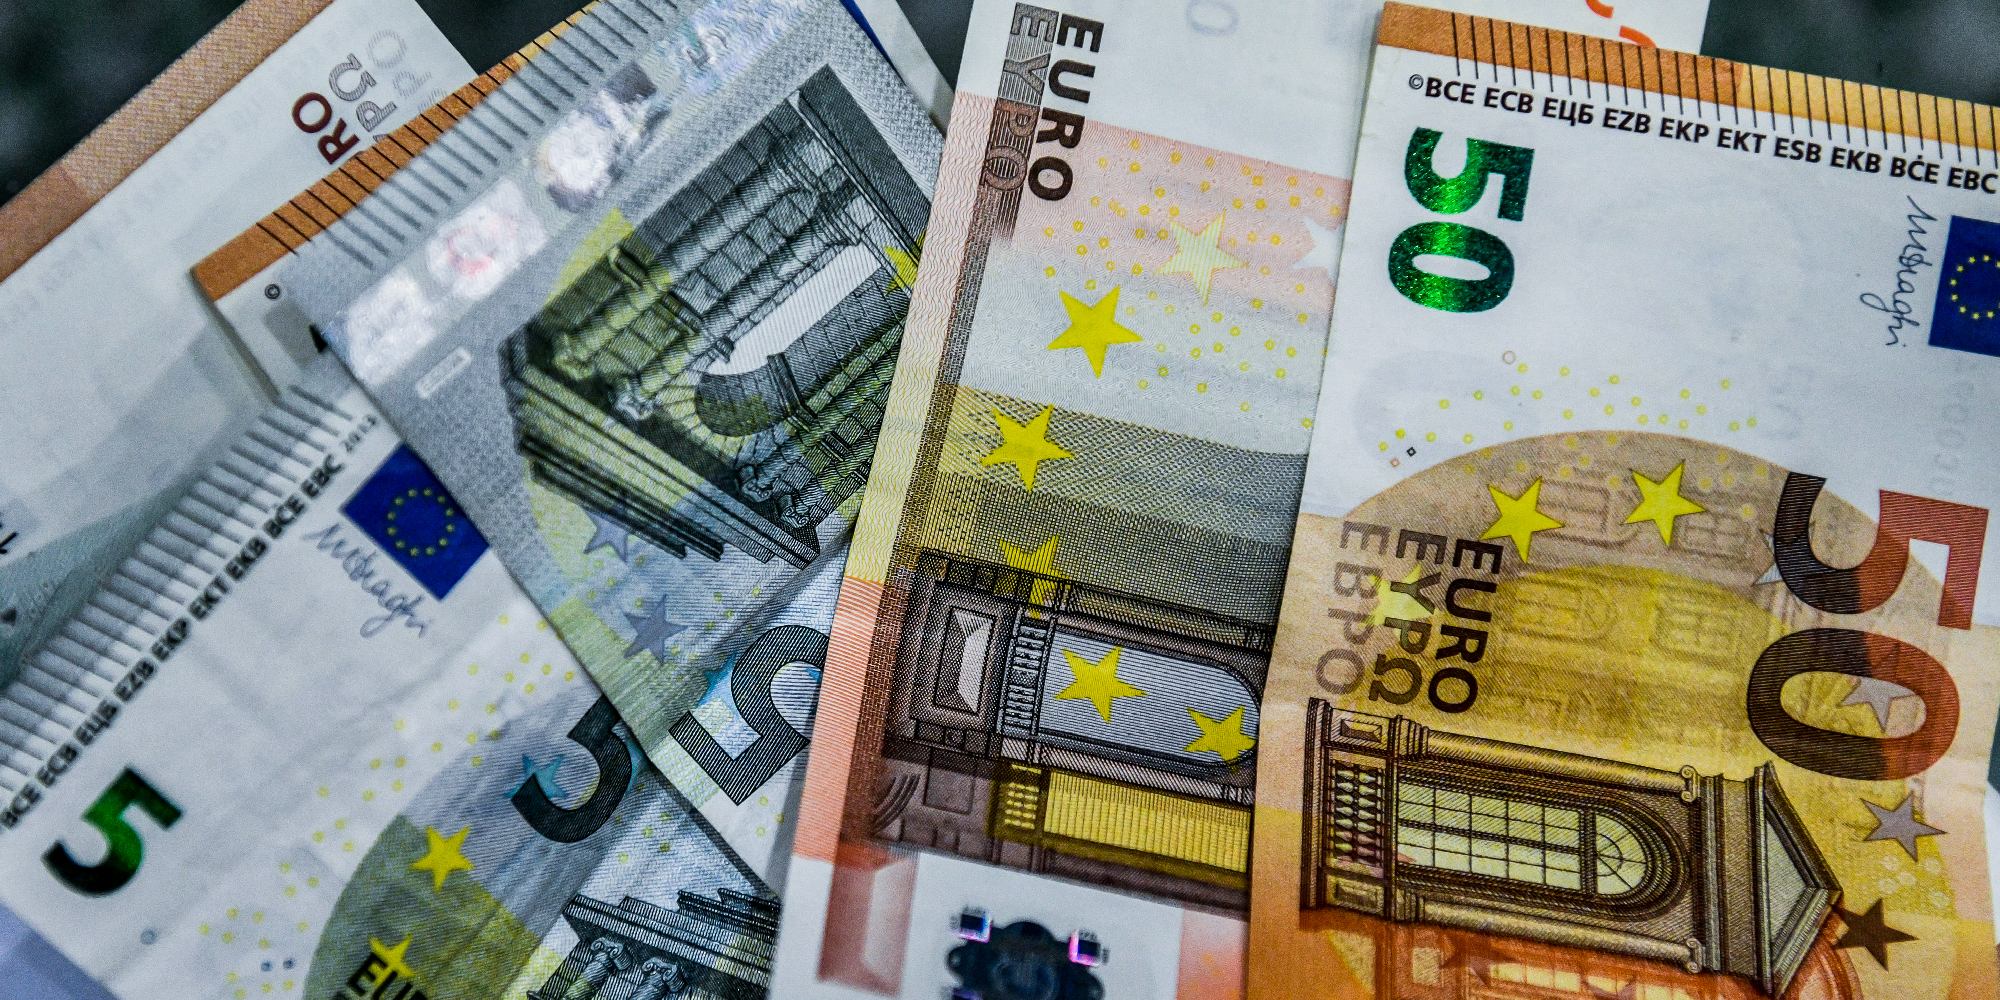 EURO XRHMATA 24 1 2022 - Στις αγορές με νέο 5ετες ομόλογο η Ελλάδα - Αισιοδοξία των οίκων πιστοληπτικής αξιολόγησης για την επενδυτική βαθμίδα